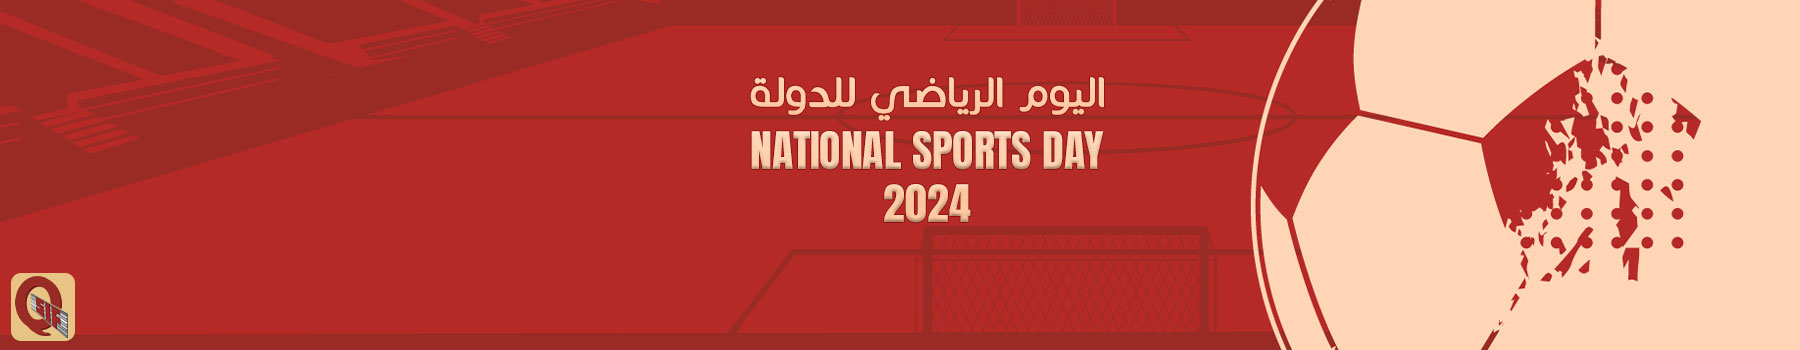 National Sport Day - Qatar Steel Factory